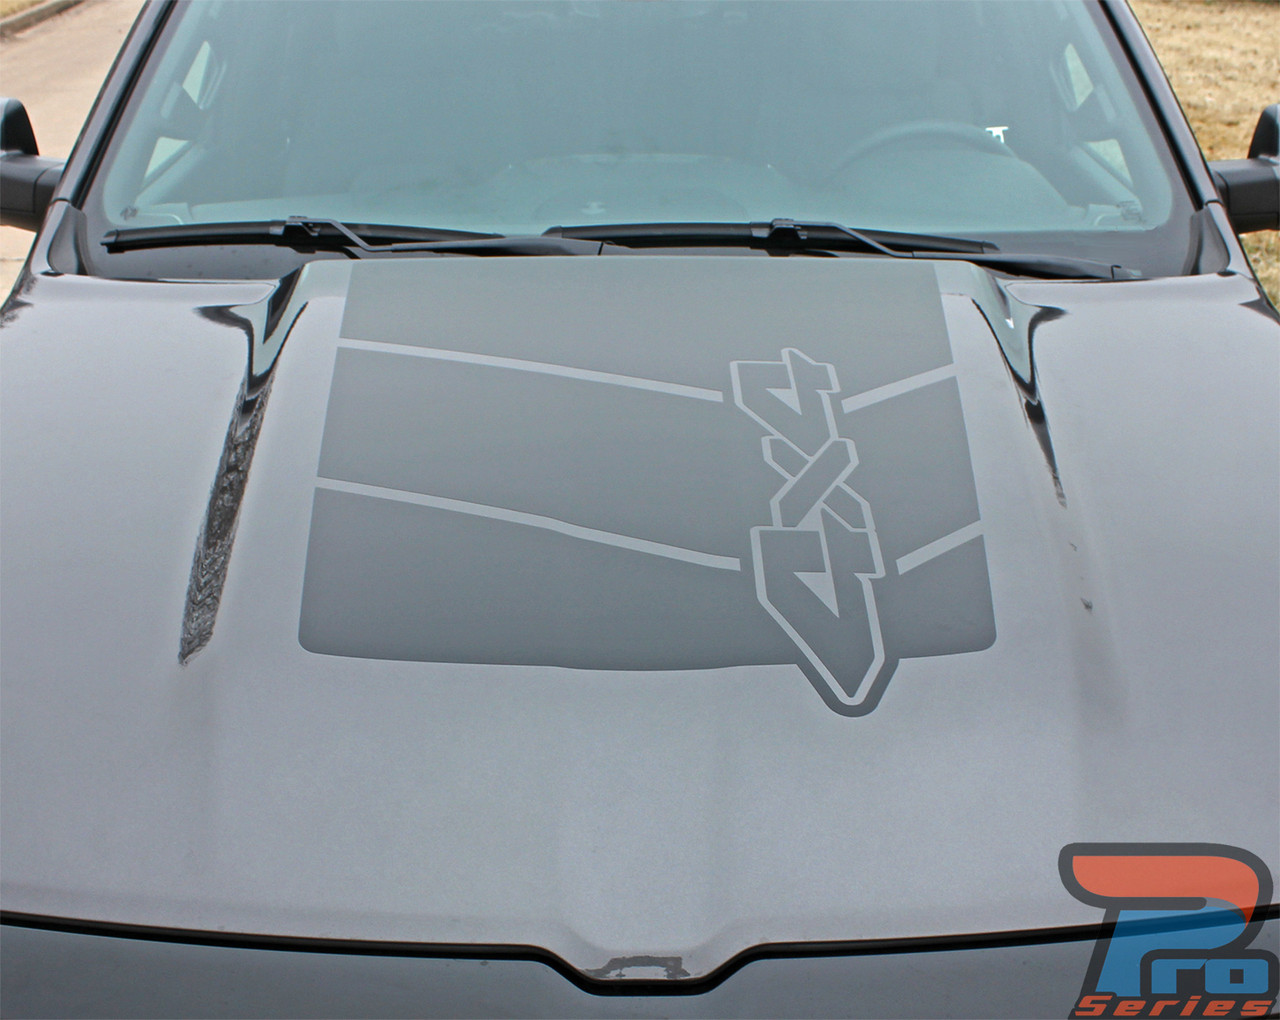 X-Wing fighter  Fits Ram Rebel Hood Truck Vinyl Decal Vehicle Graphic